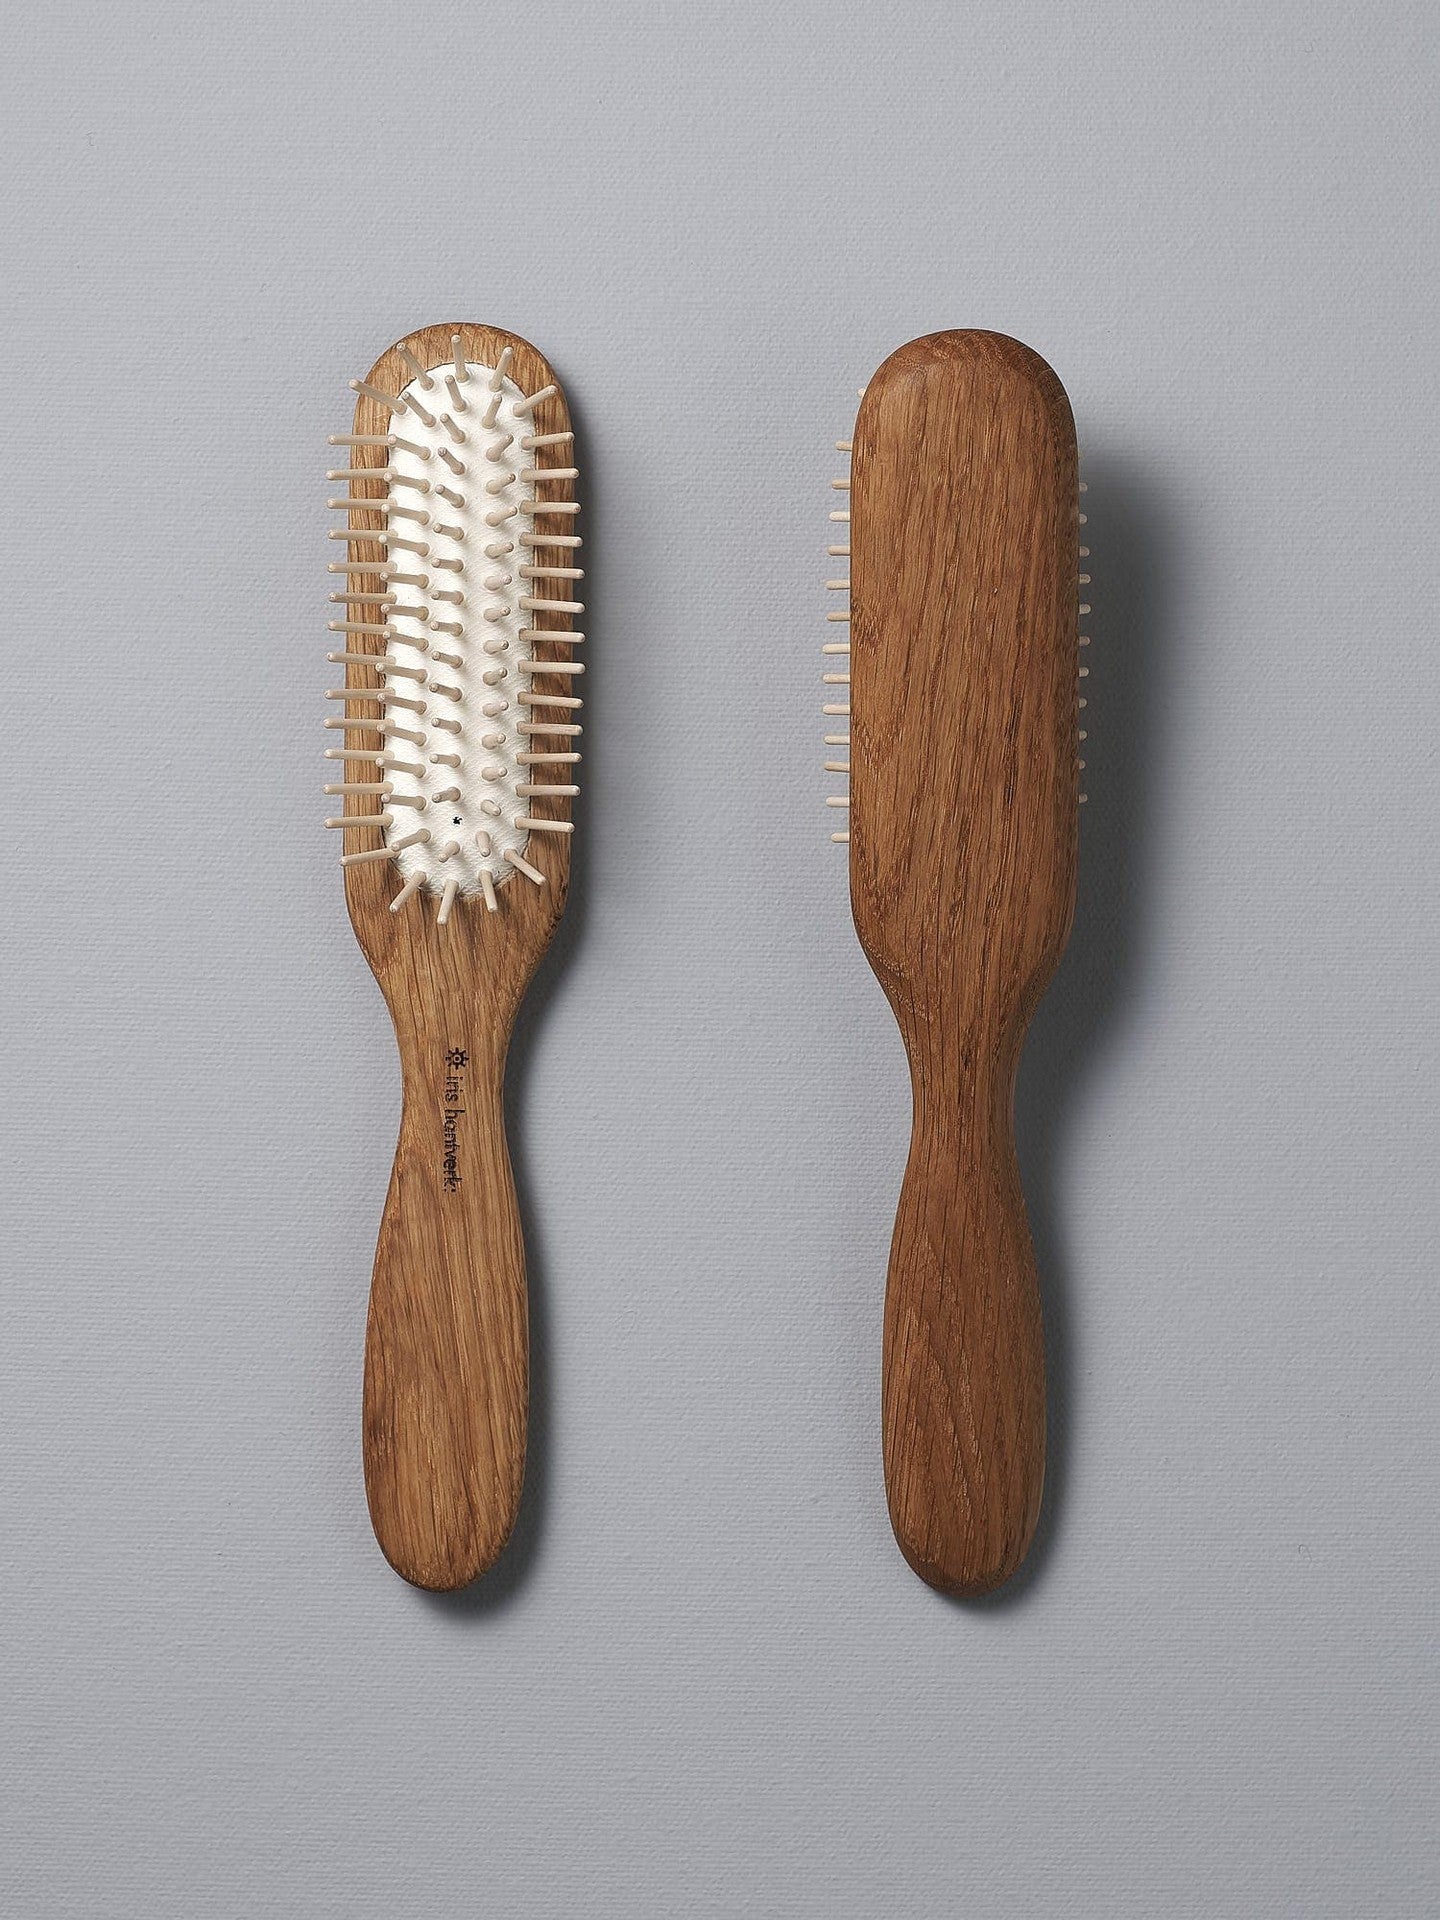 Two Oak Hairbrushes by Iris Hantverk on a grey background.